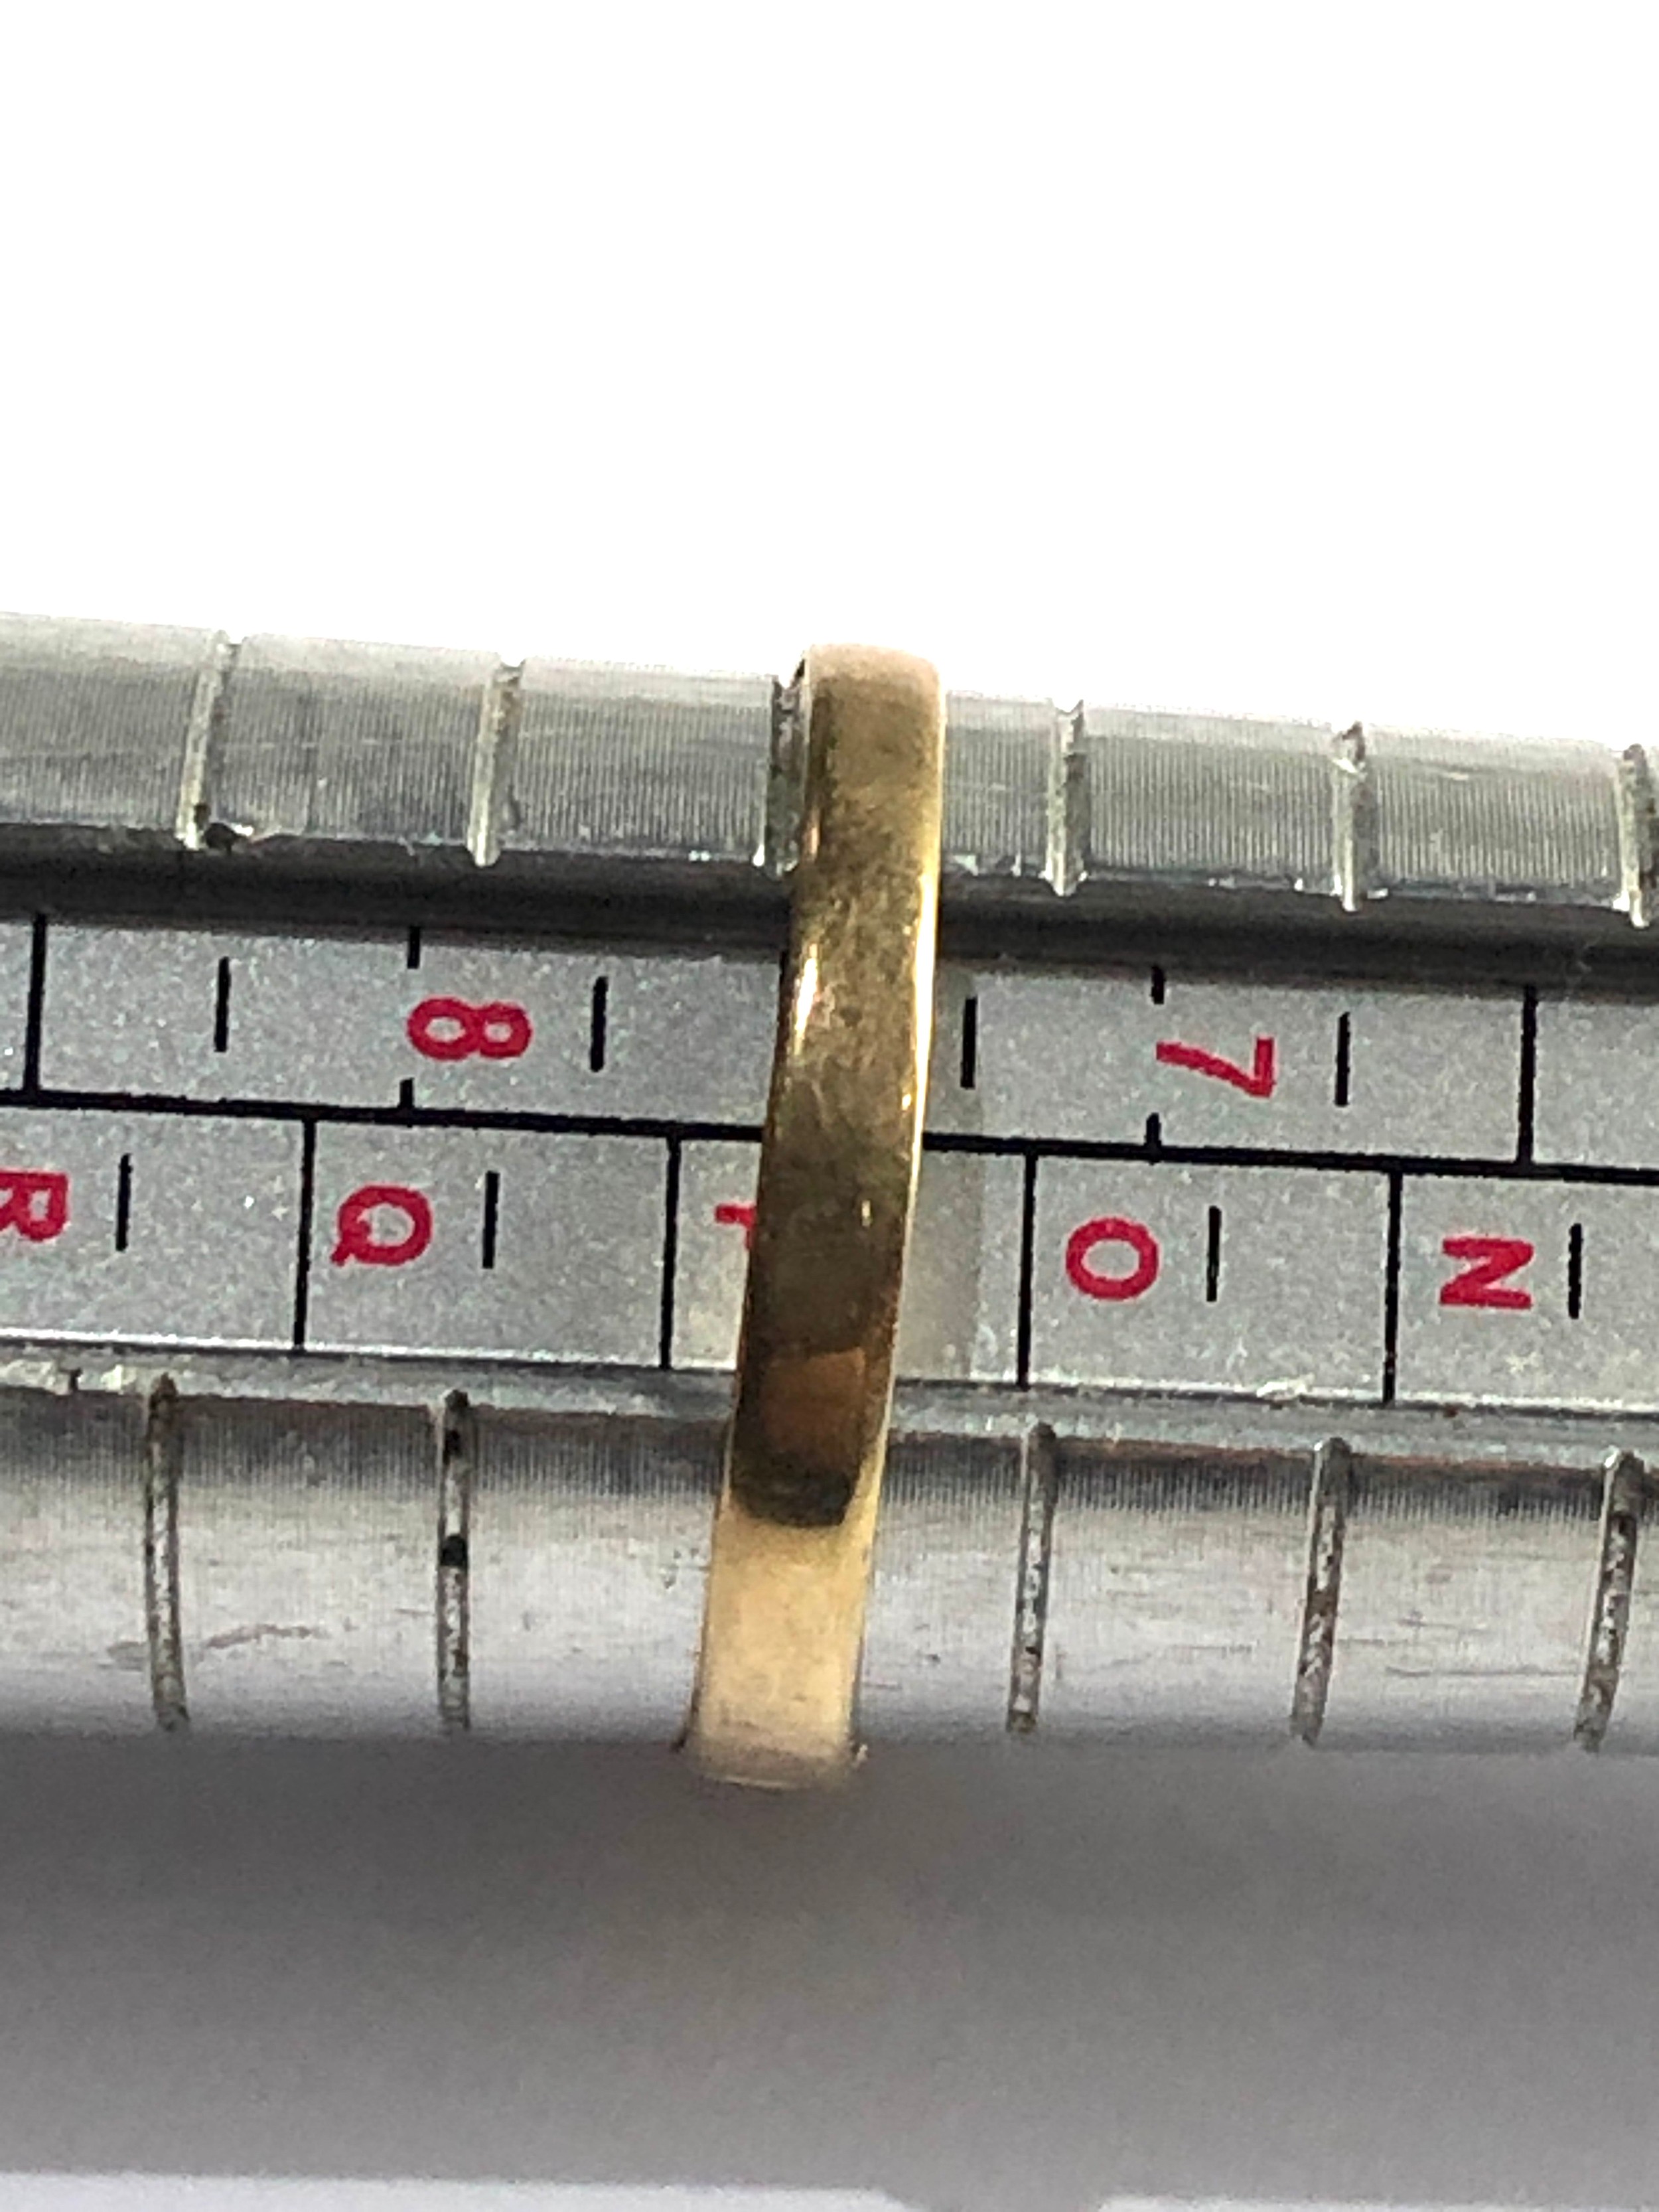 9ct gold diamond & sapphire ring weight 1.5g - Image 3 of 3